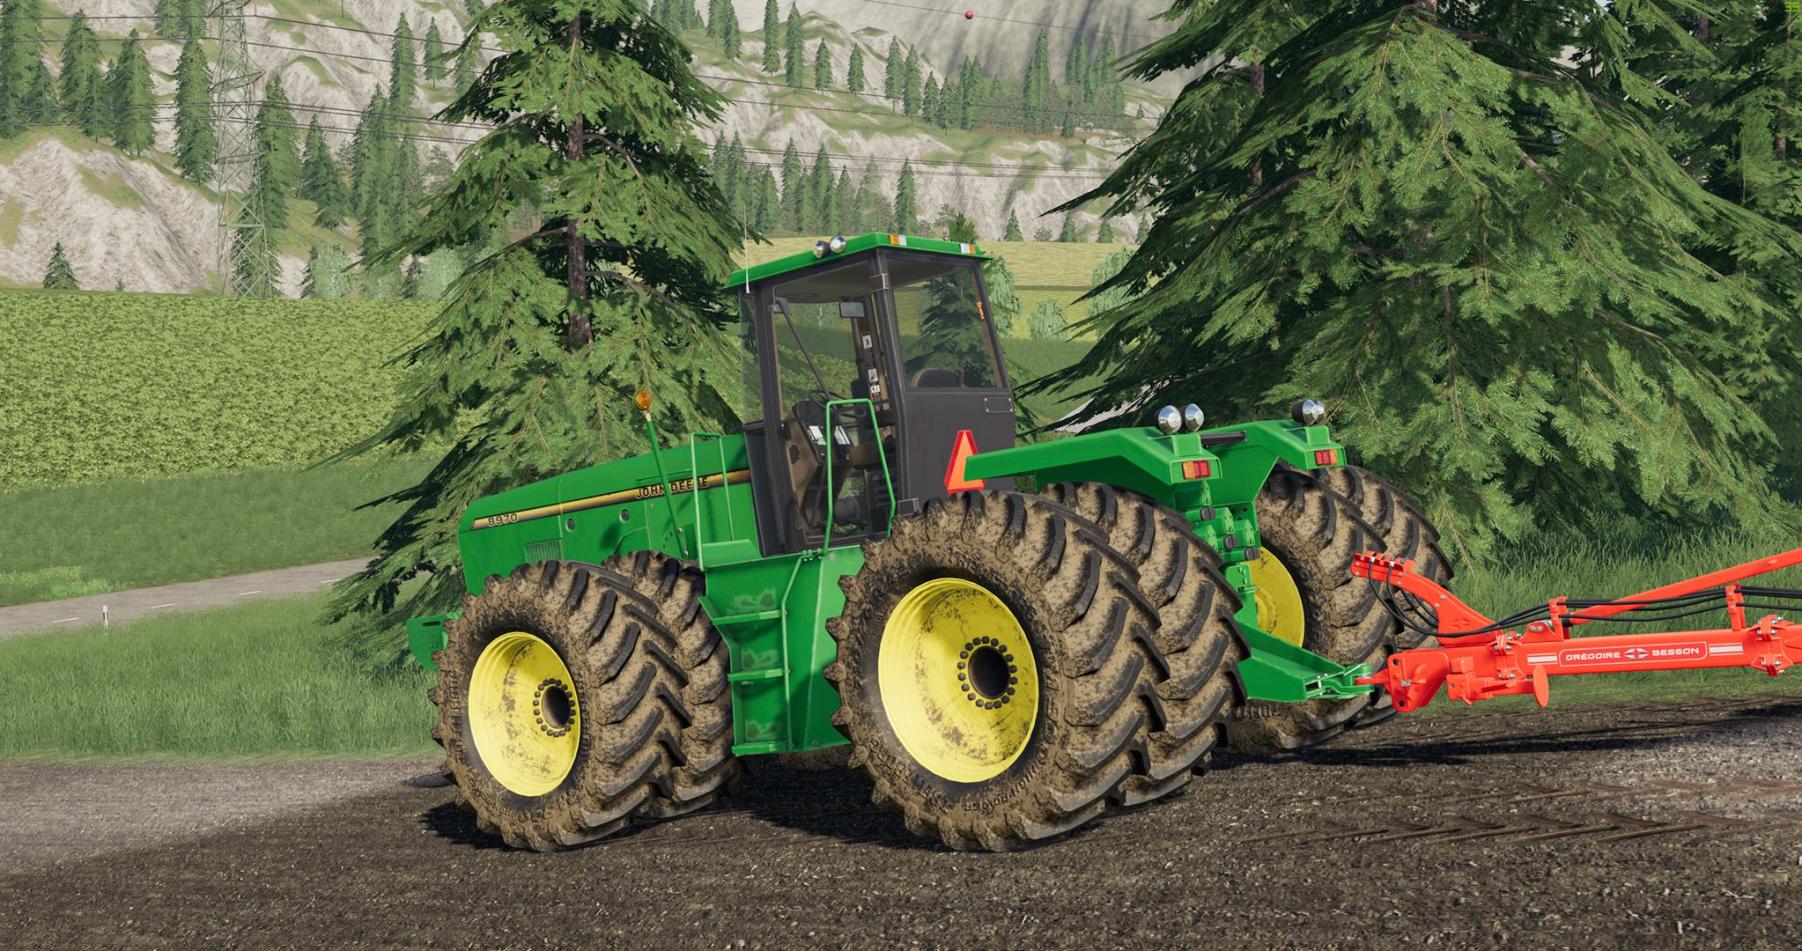 farming simulator 22 mower mod